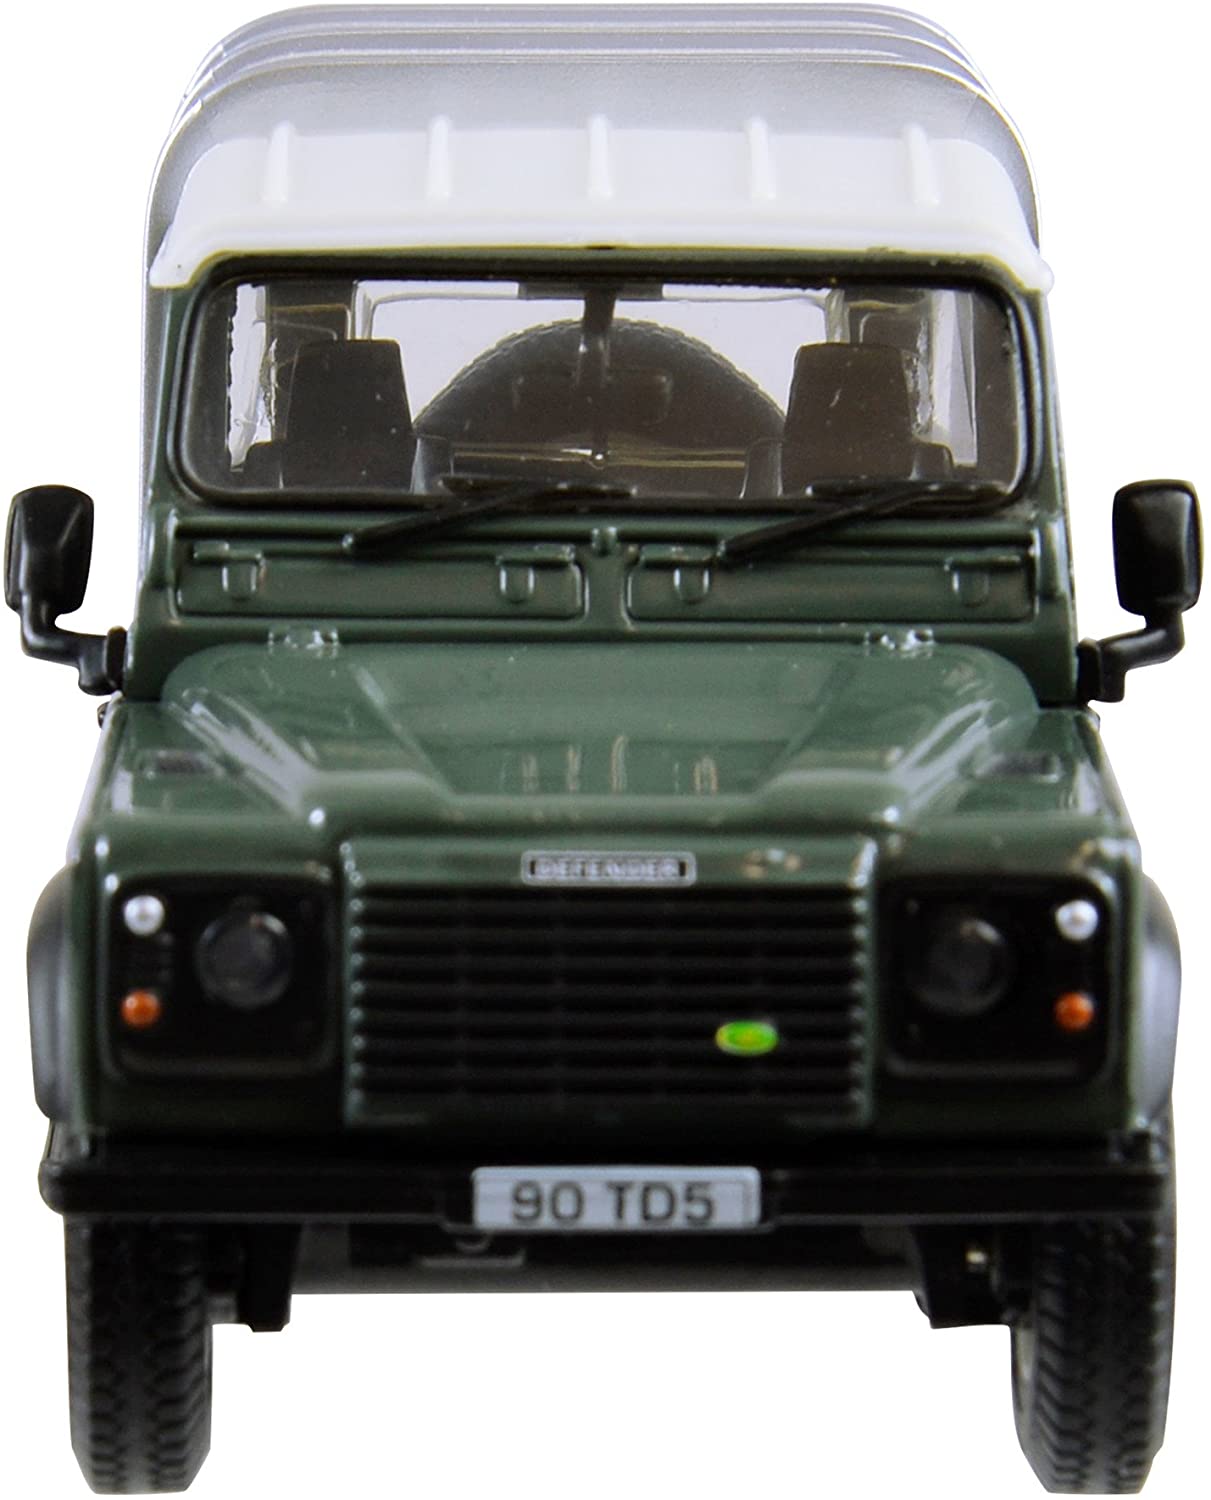 Britains Land Rover Defender (Green)